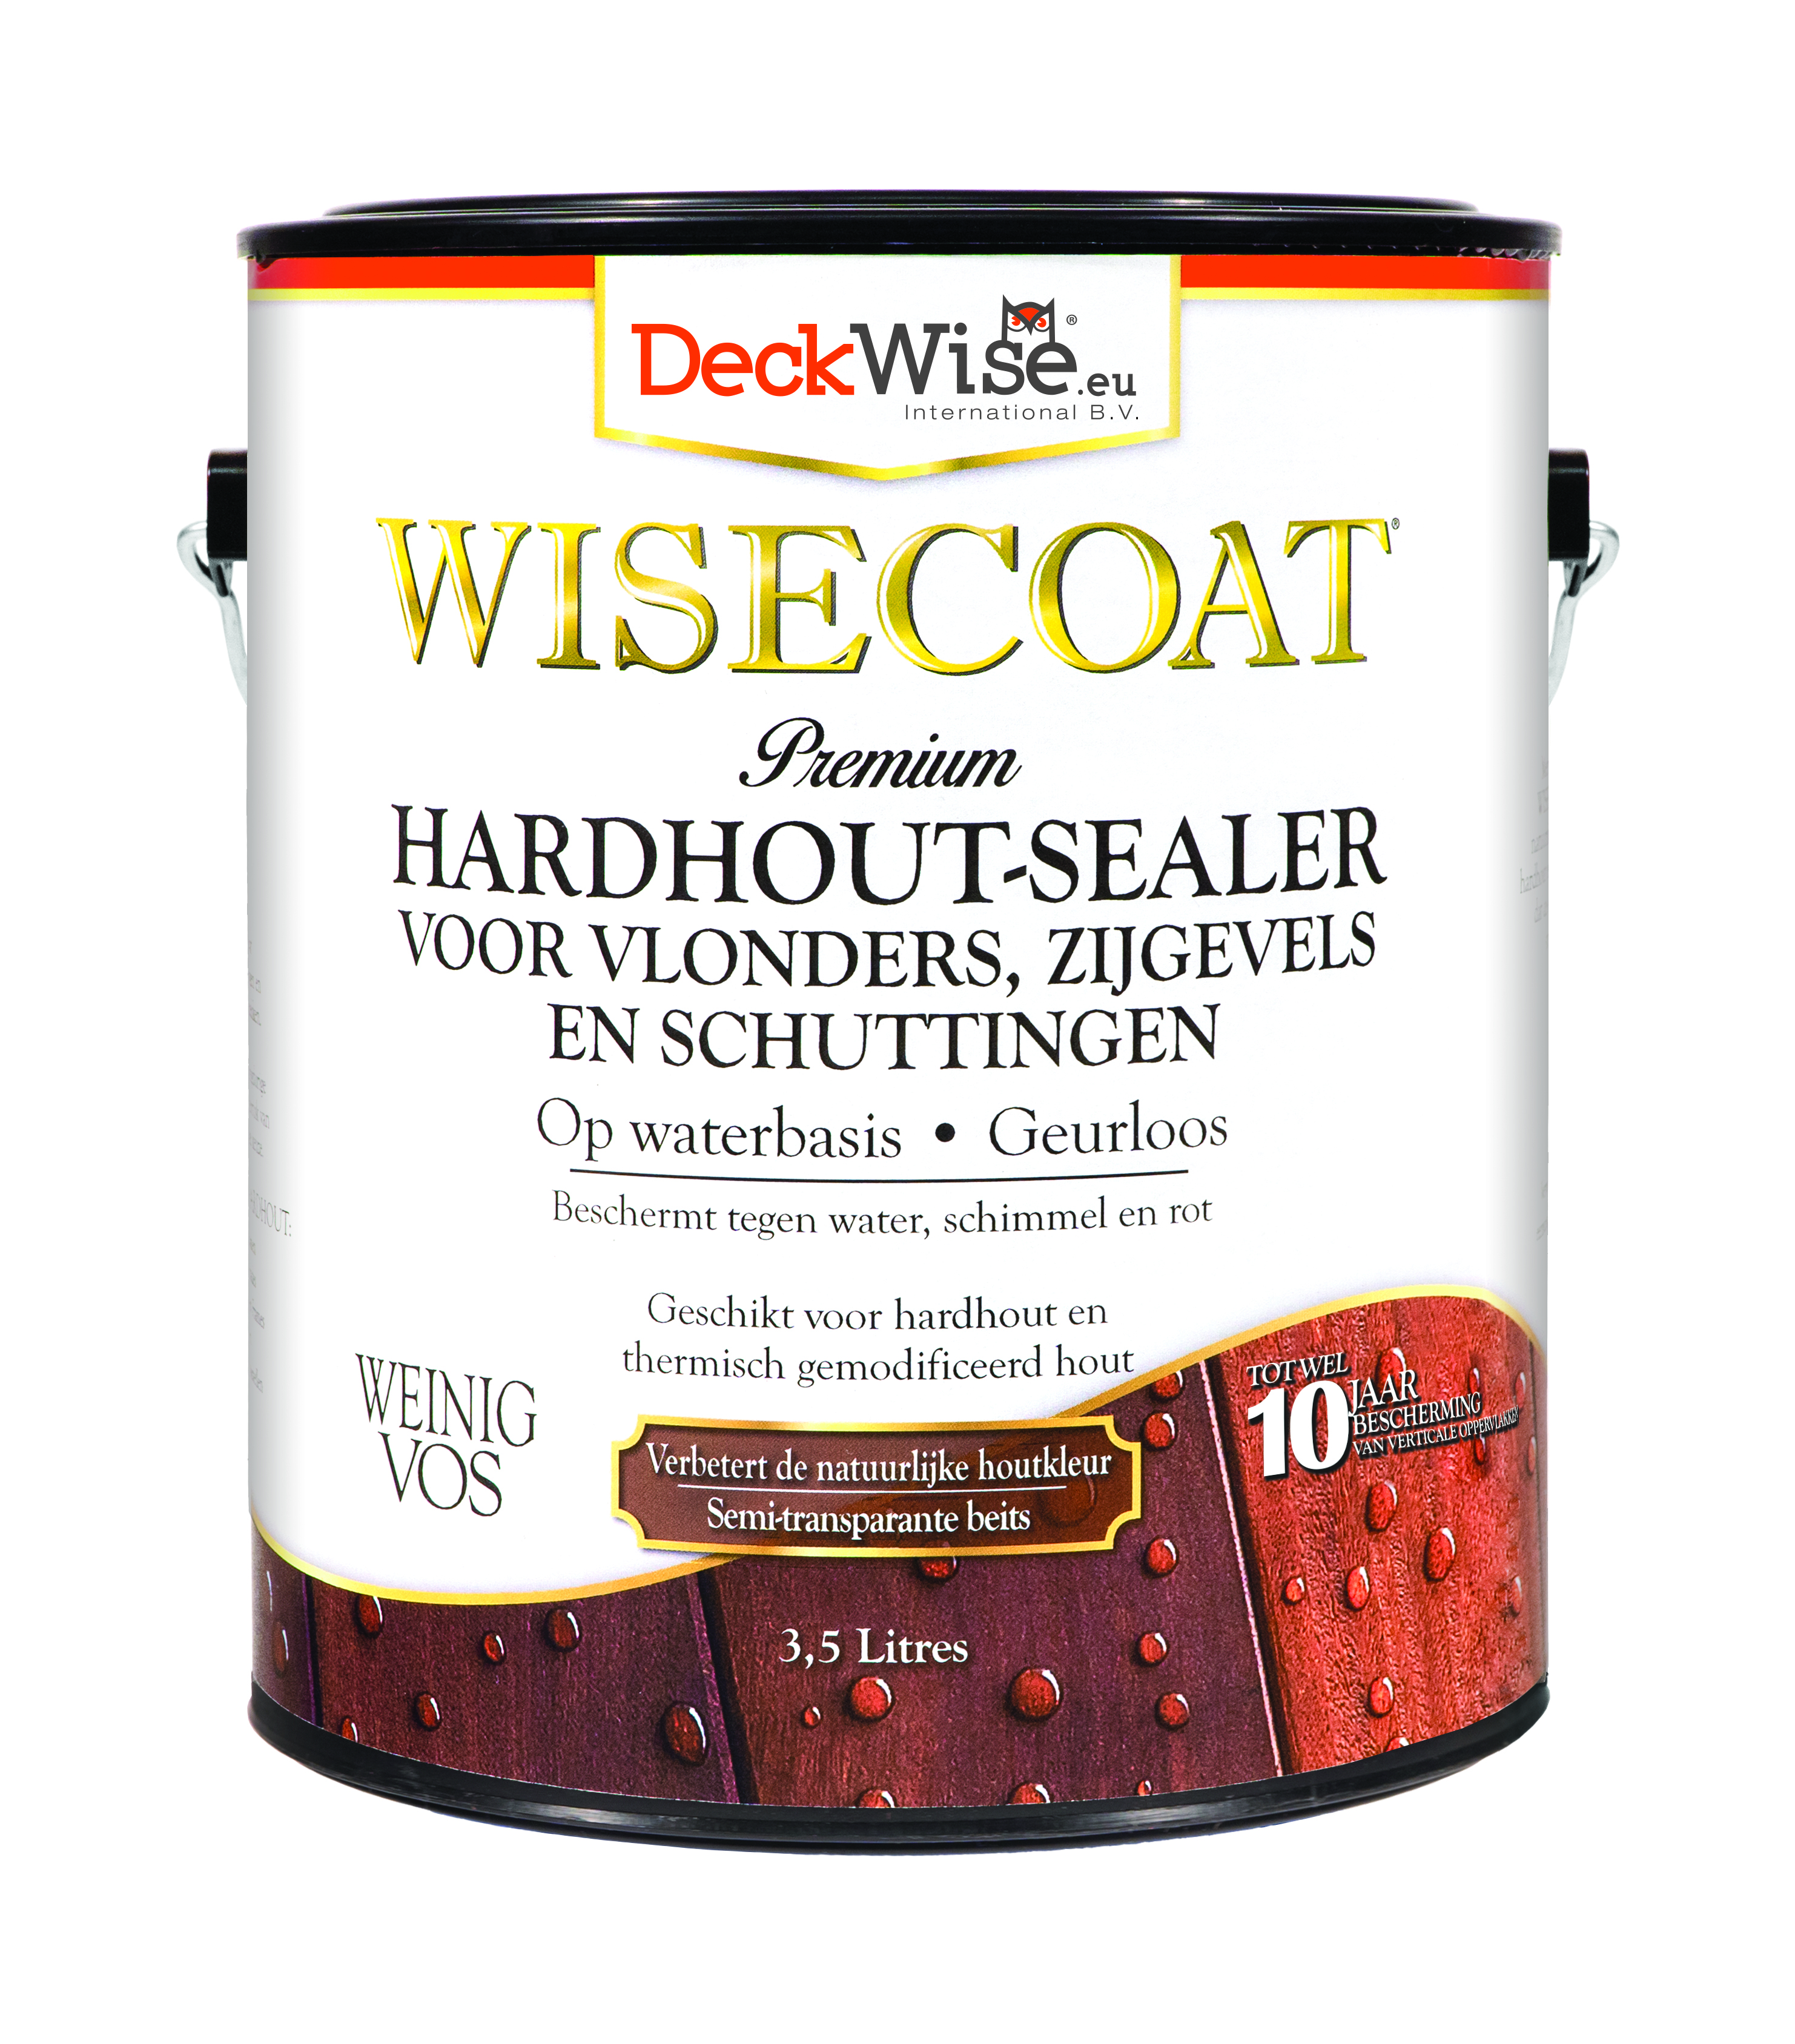 
DeckWise® WiseCoat® Premium Hardhout-sealer